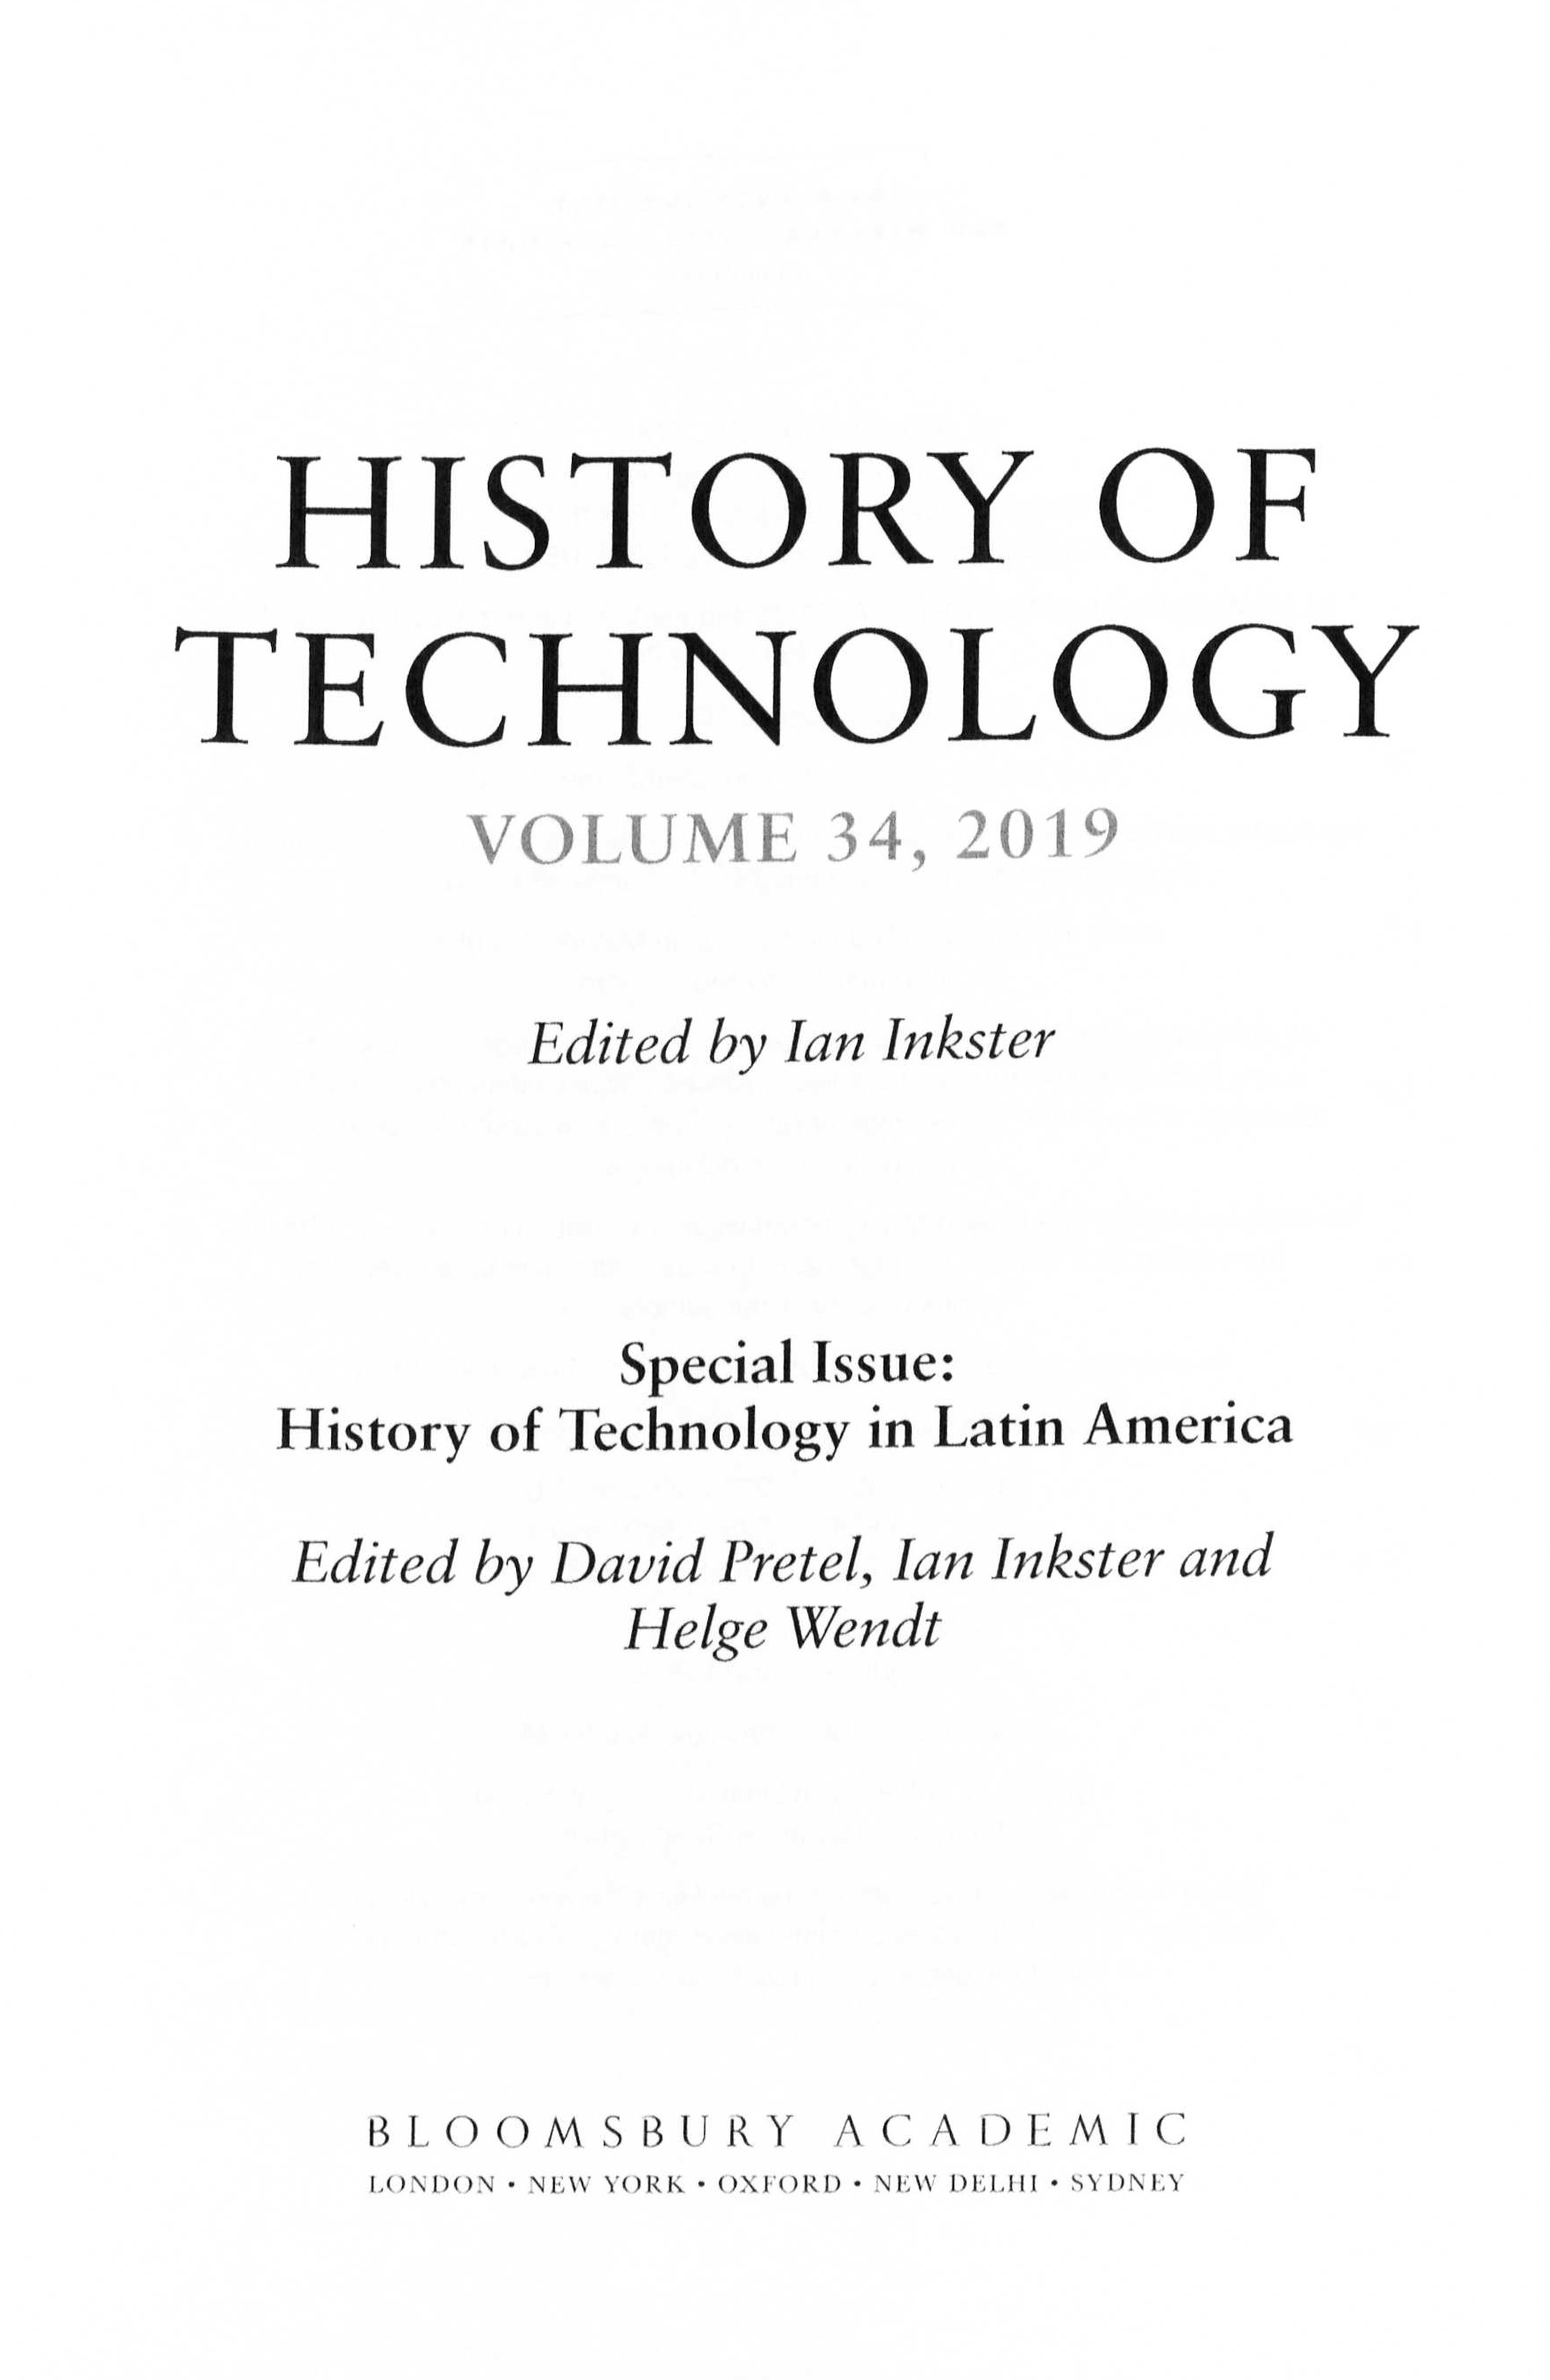 book cover: Wendt et al: History of technology (2019)